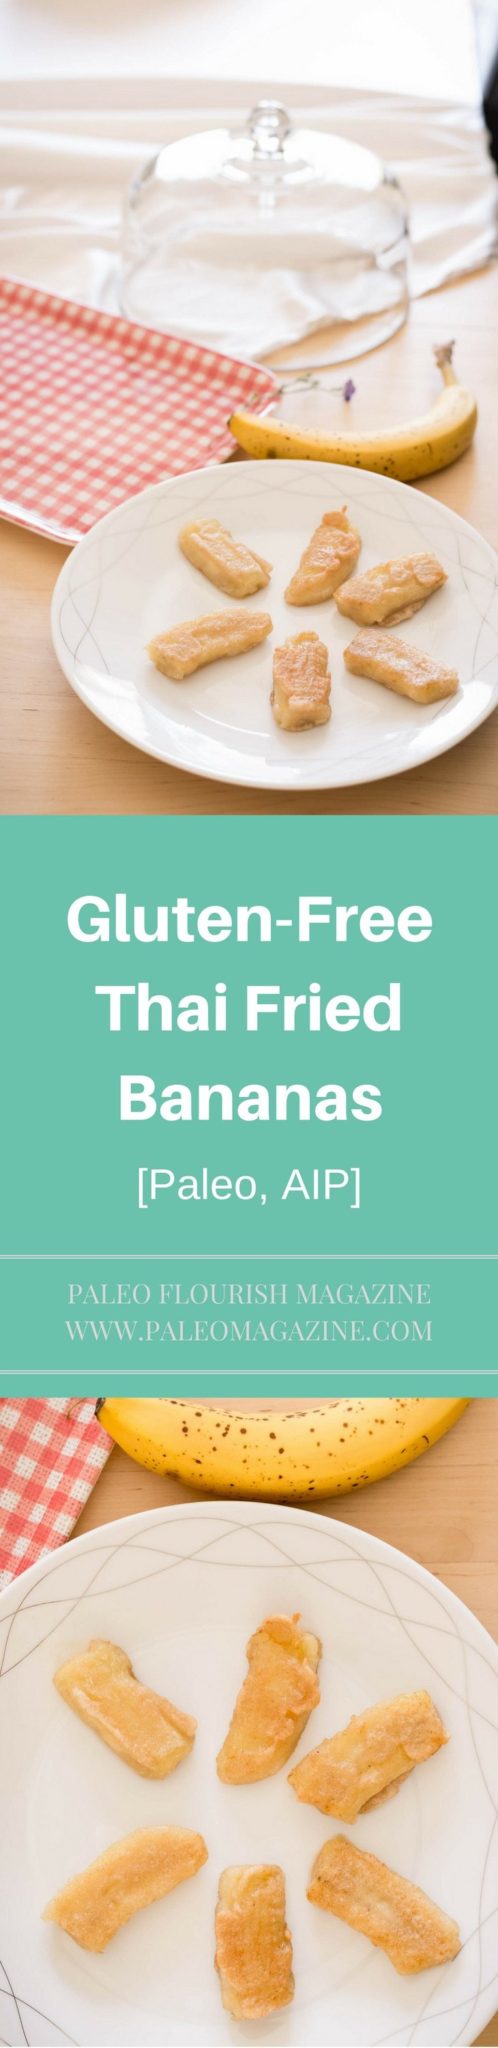 Gluten-Free Thai Fried Bananas Recipe [Paleo, AIP] #paleo #aip #recipes - https://paleoflourish.com/gluten-free-thai-fried-bananas-recipe